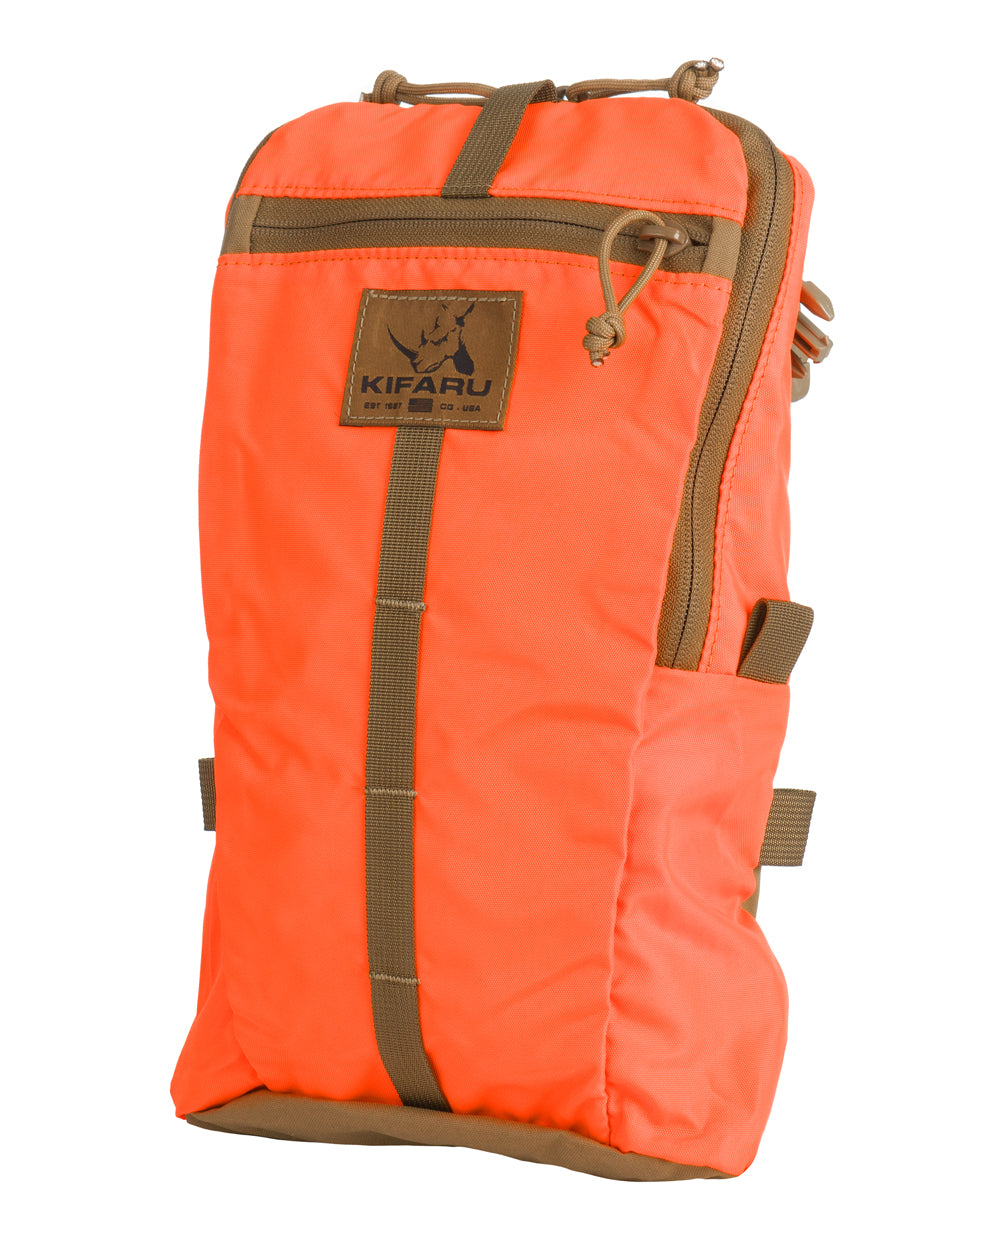 Pack Accessories | Accessories For Backpacking Packs | Kifaru